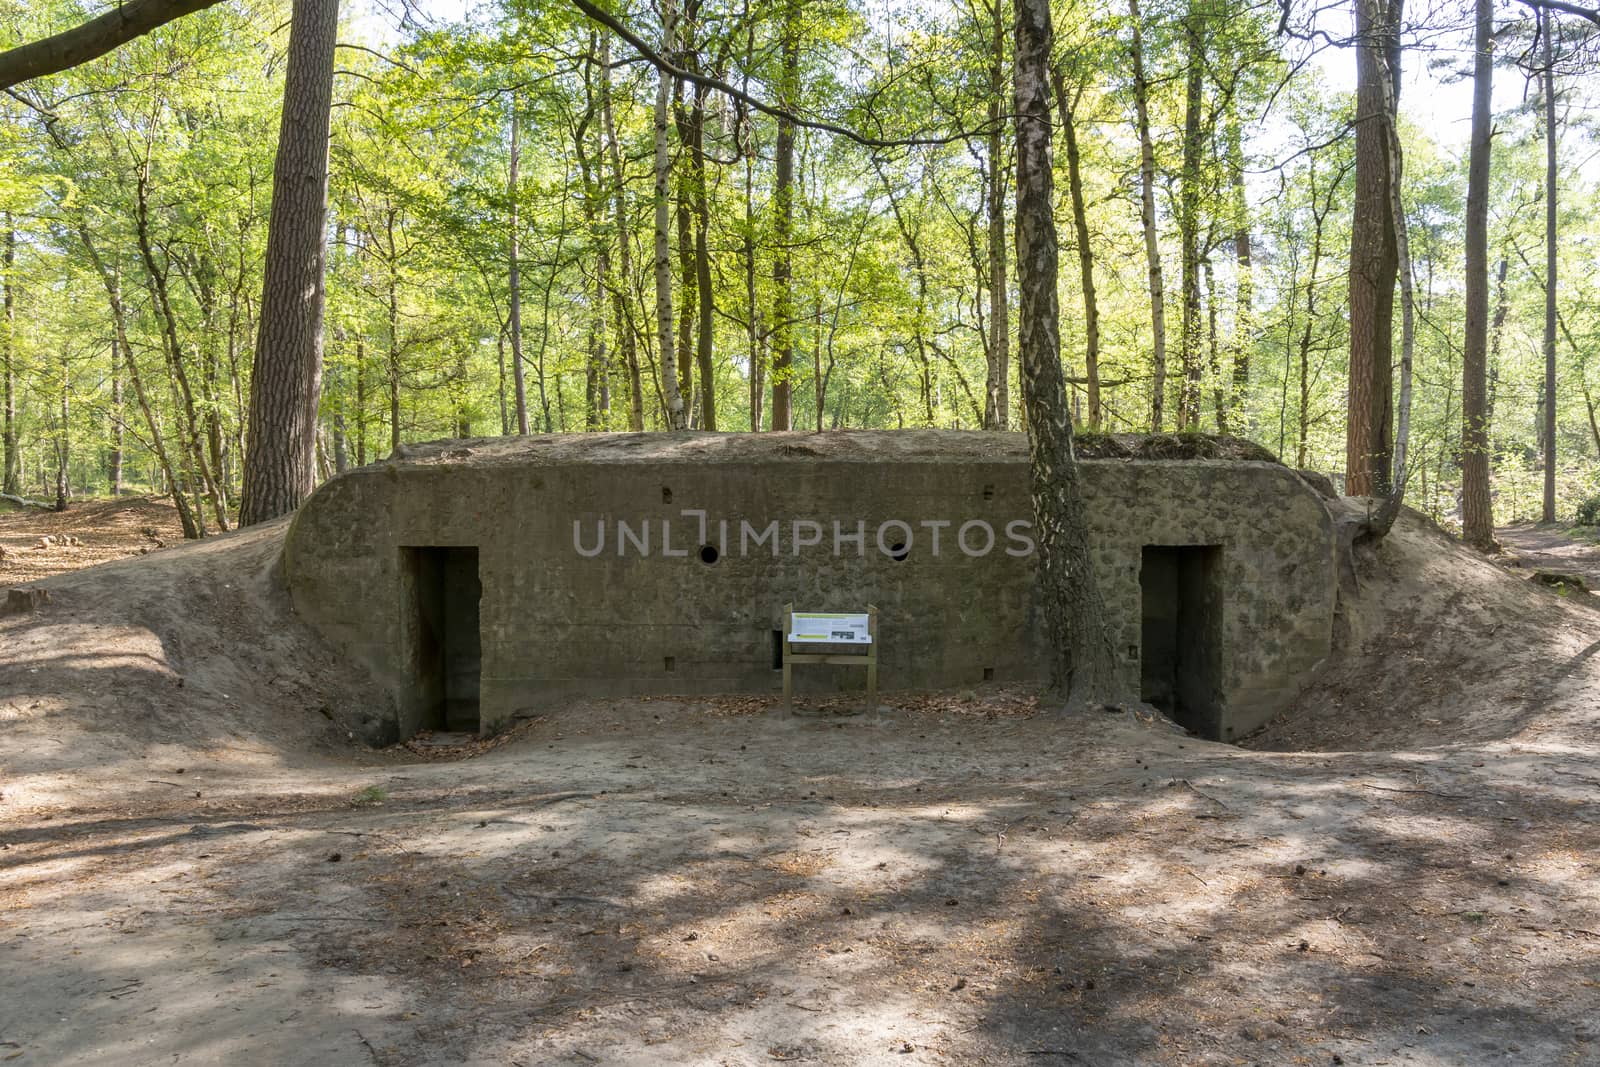 German Troepenbunker, or Troop Bunker, in mastenbos Kapellen, part of Flanders Fields WWI remembrance. by kb79